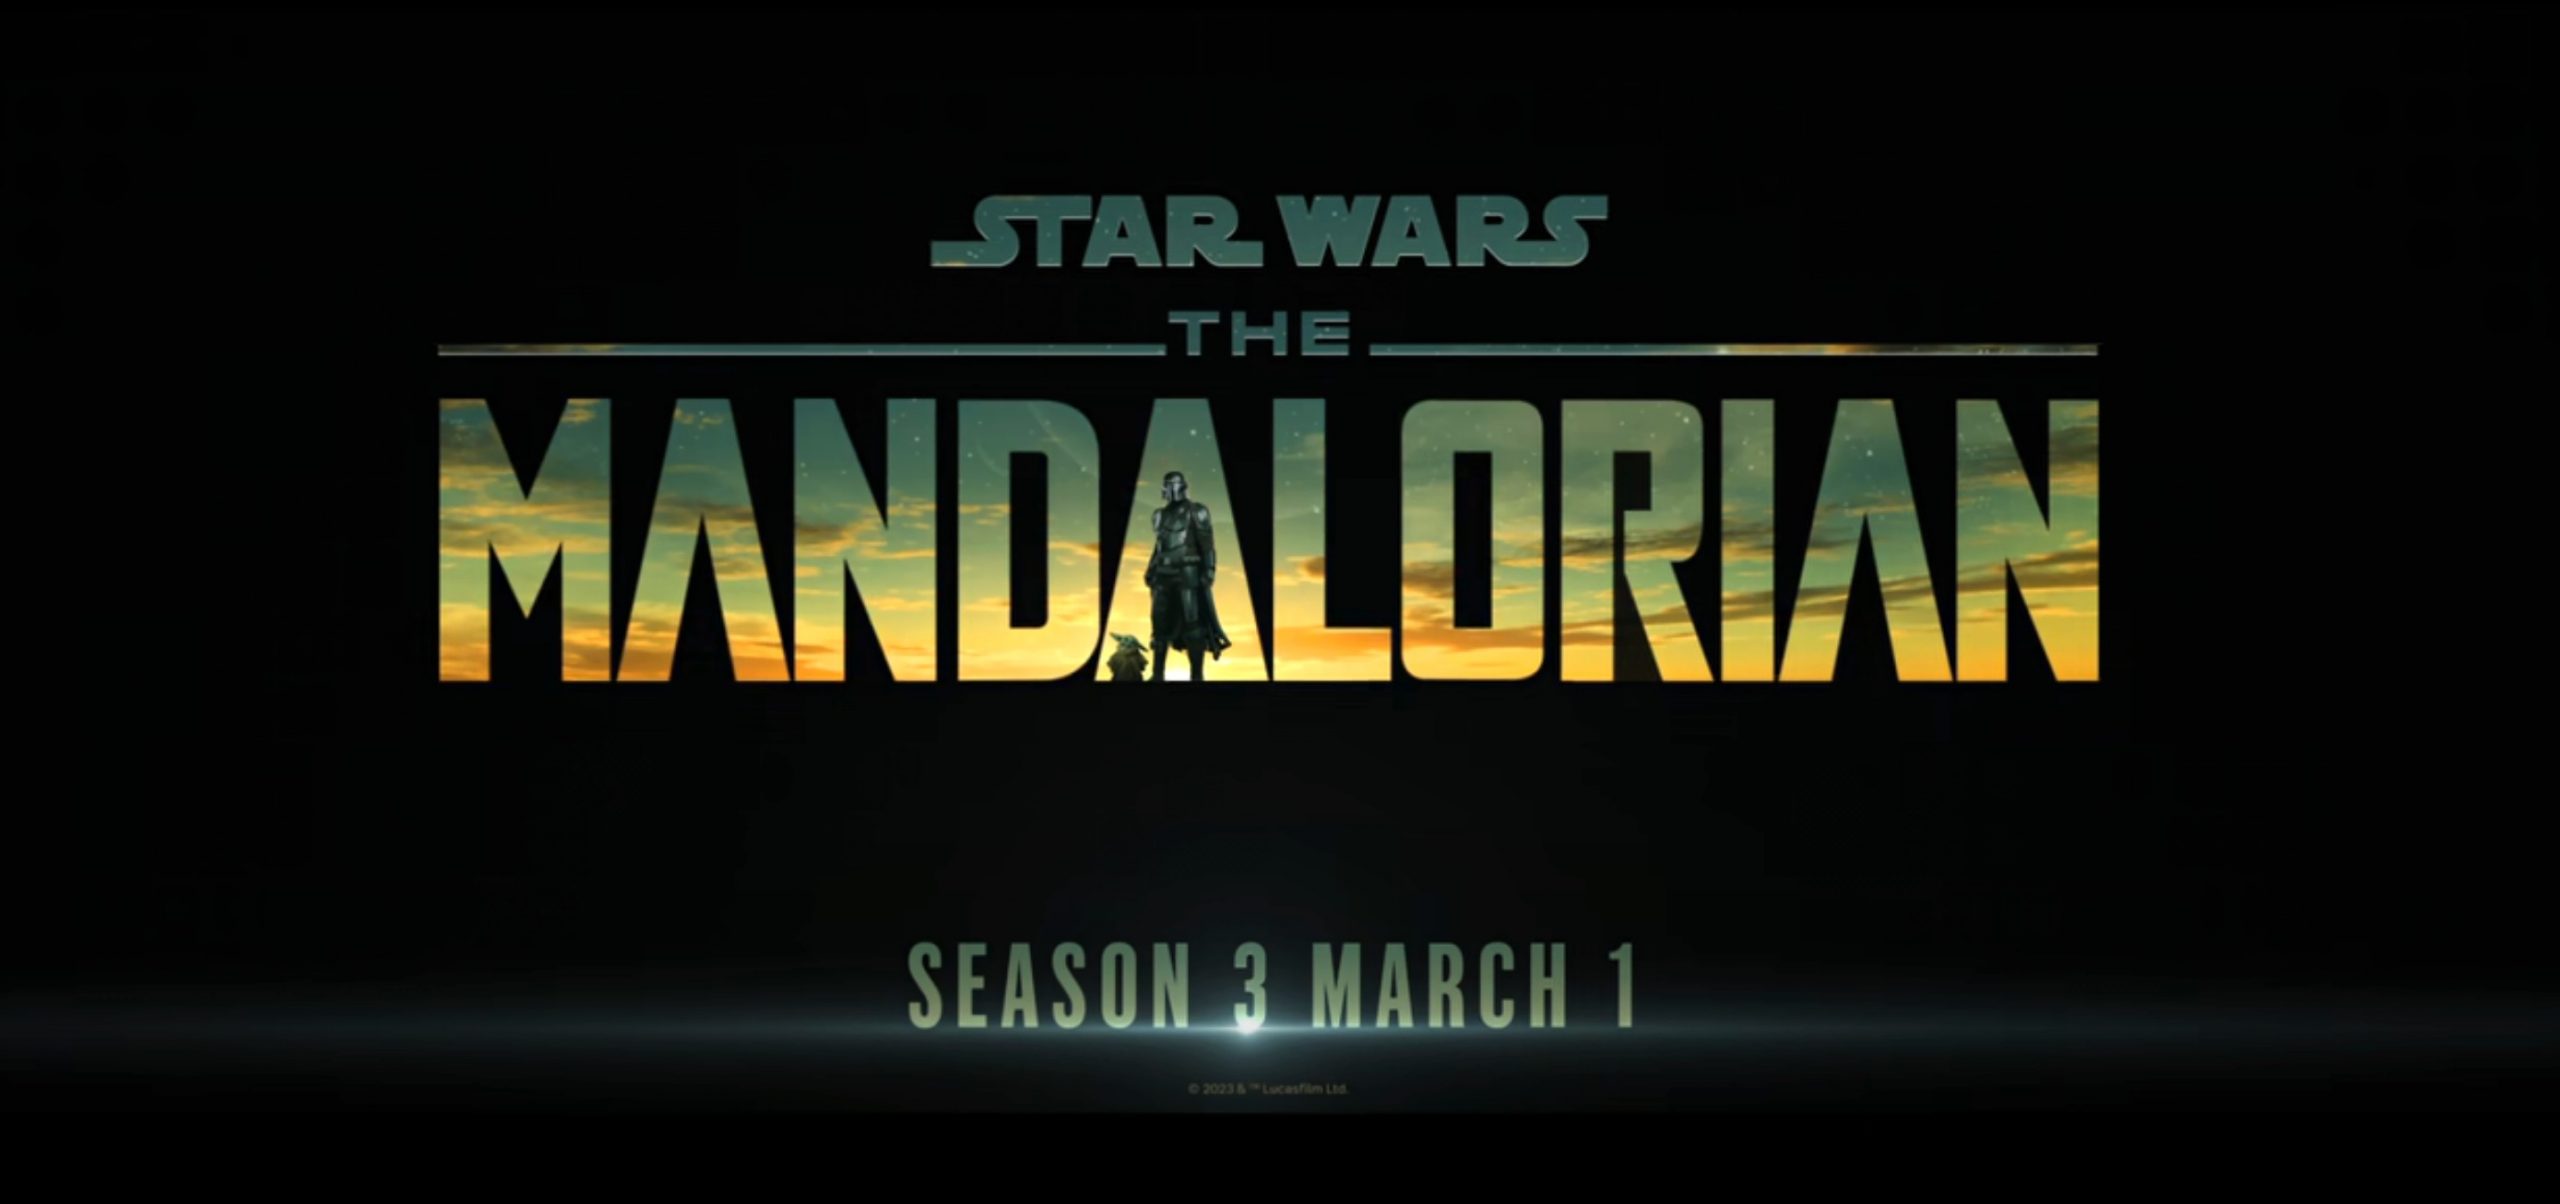 Disney releases new trailer for Season 3 of 'Star Wars: The Mandalorian'